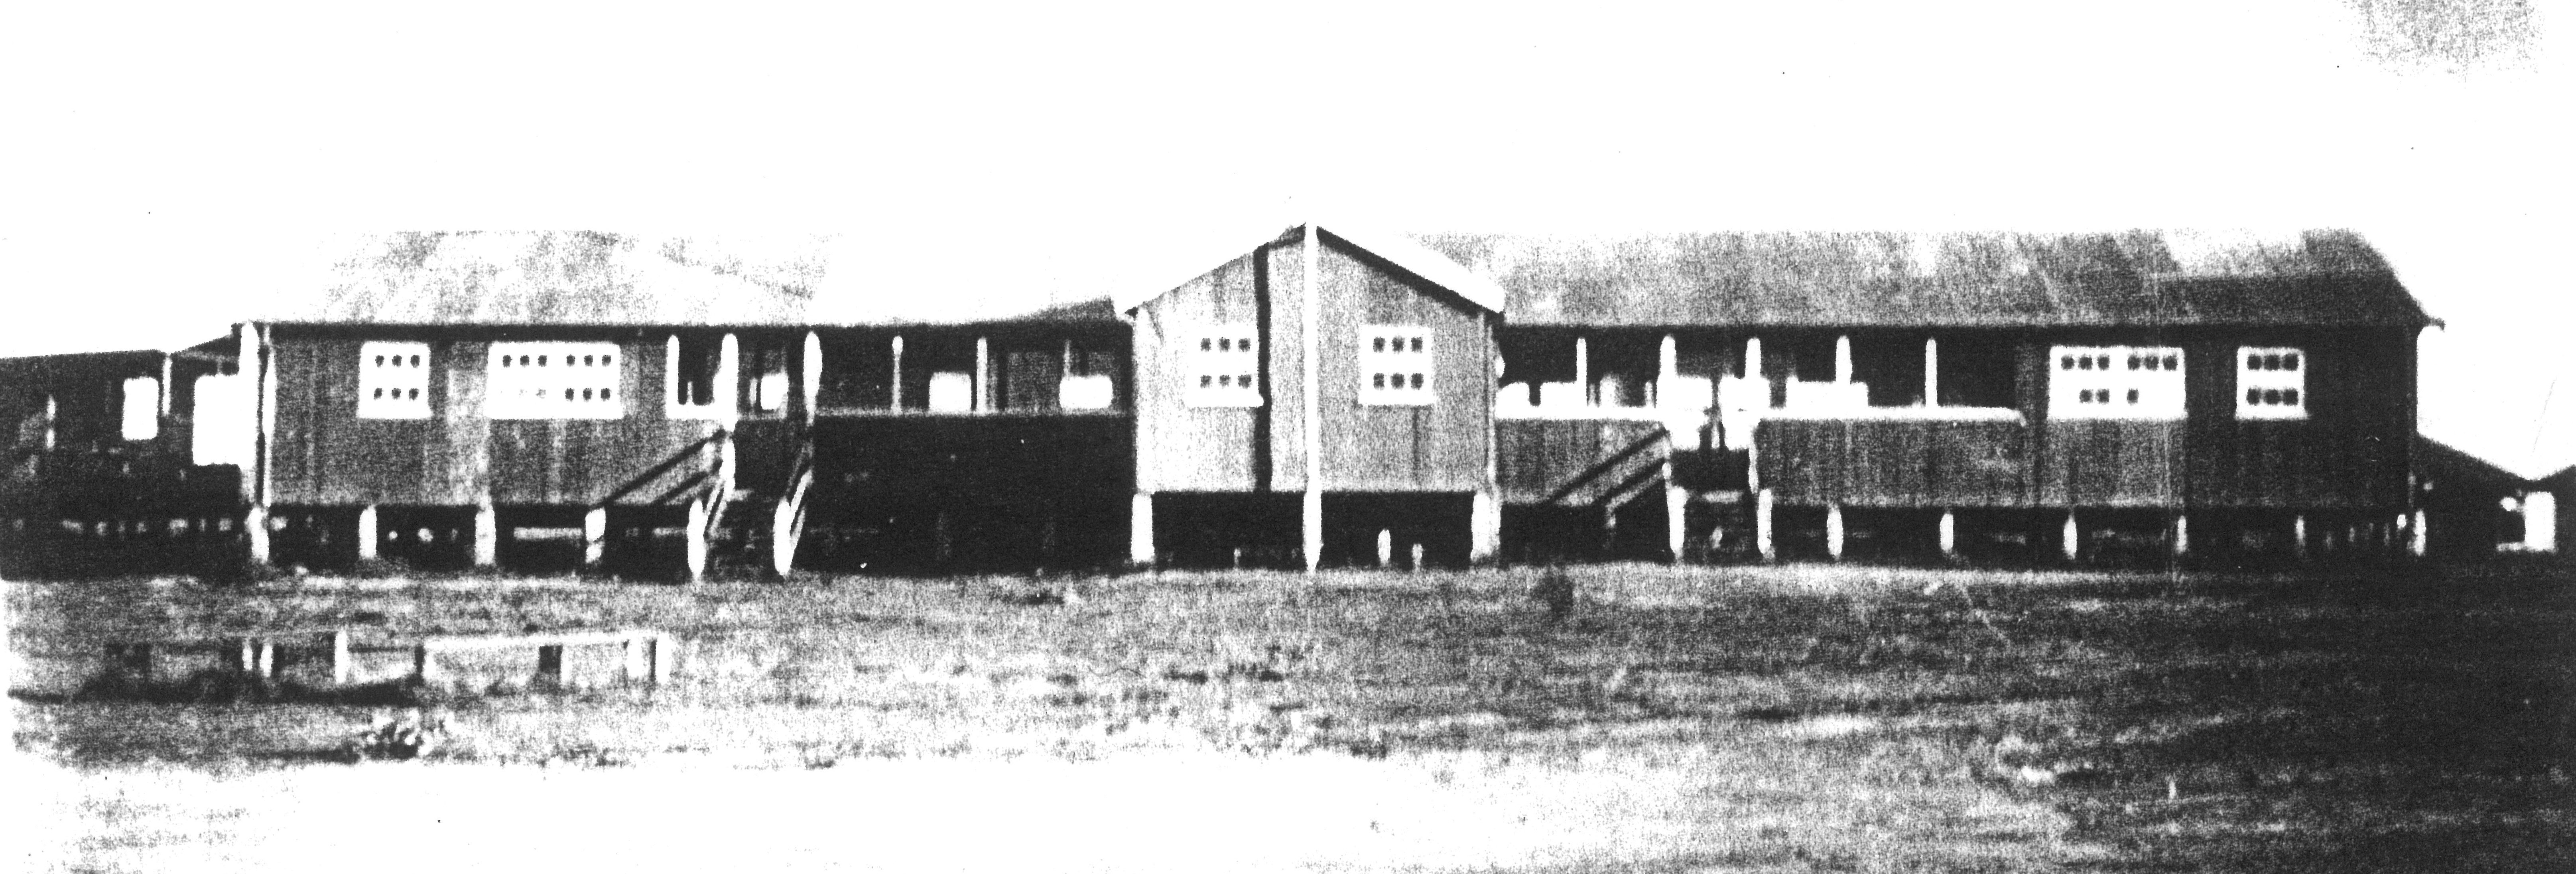 1948 school building.jpg